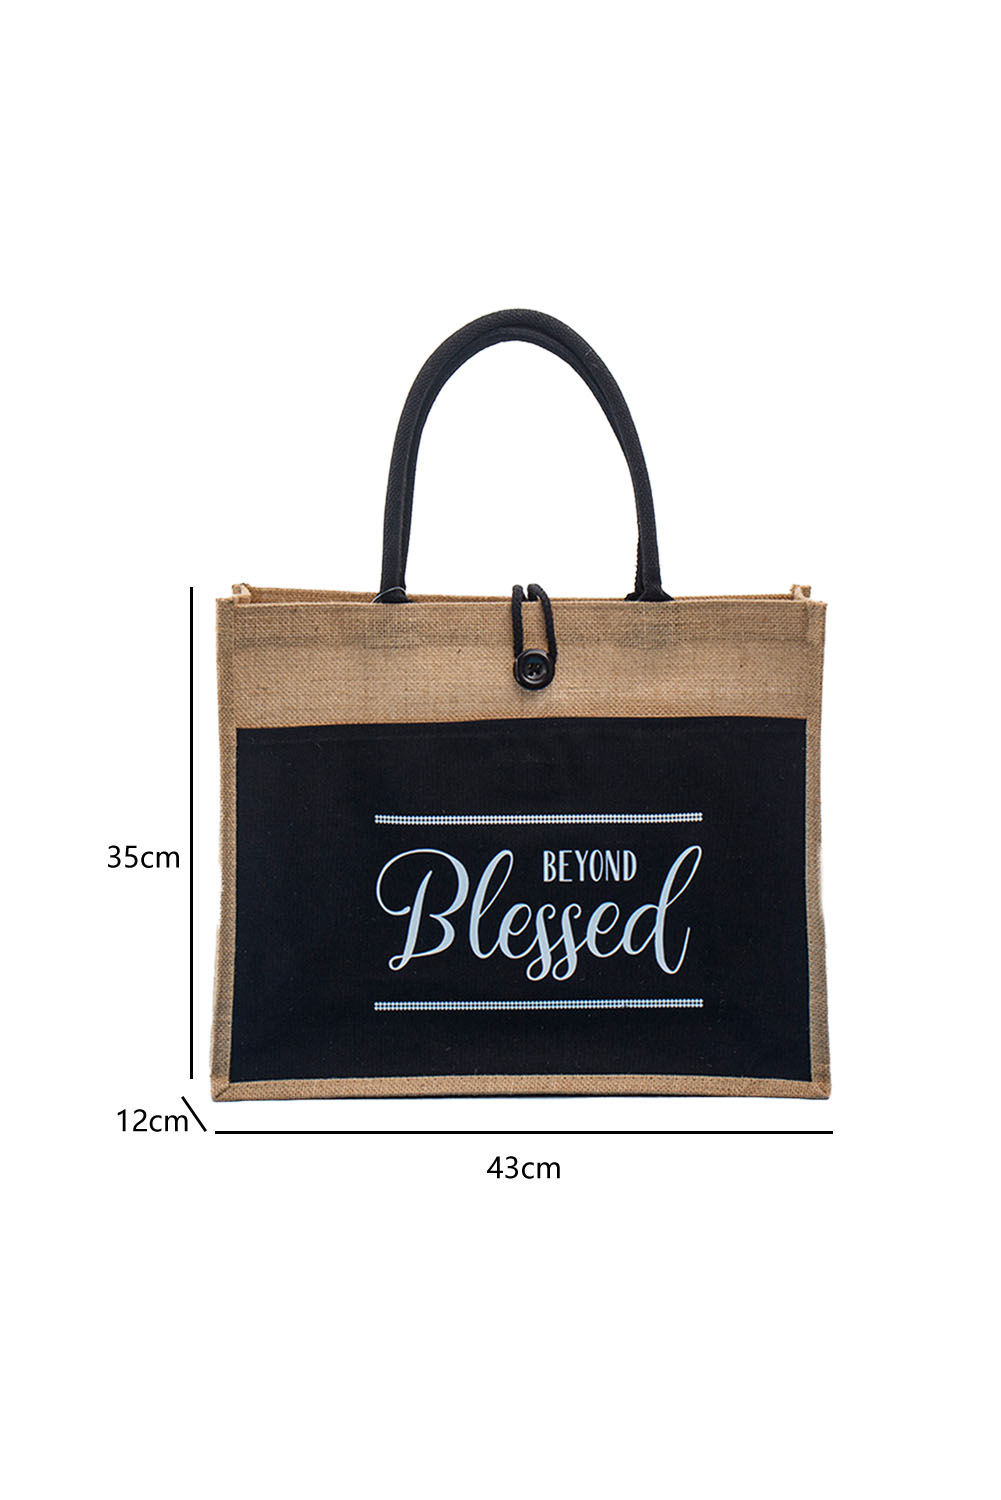 Azura Exchange BEYOND Blessed Vintage Burlap Bag | Flax Material